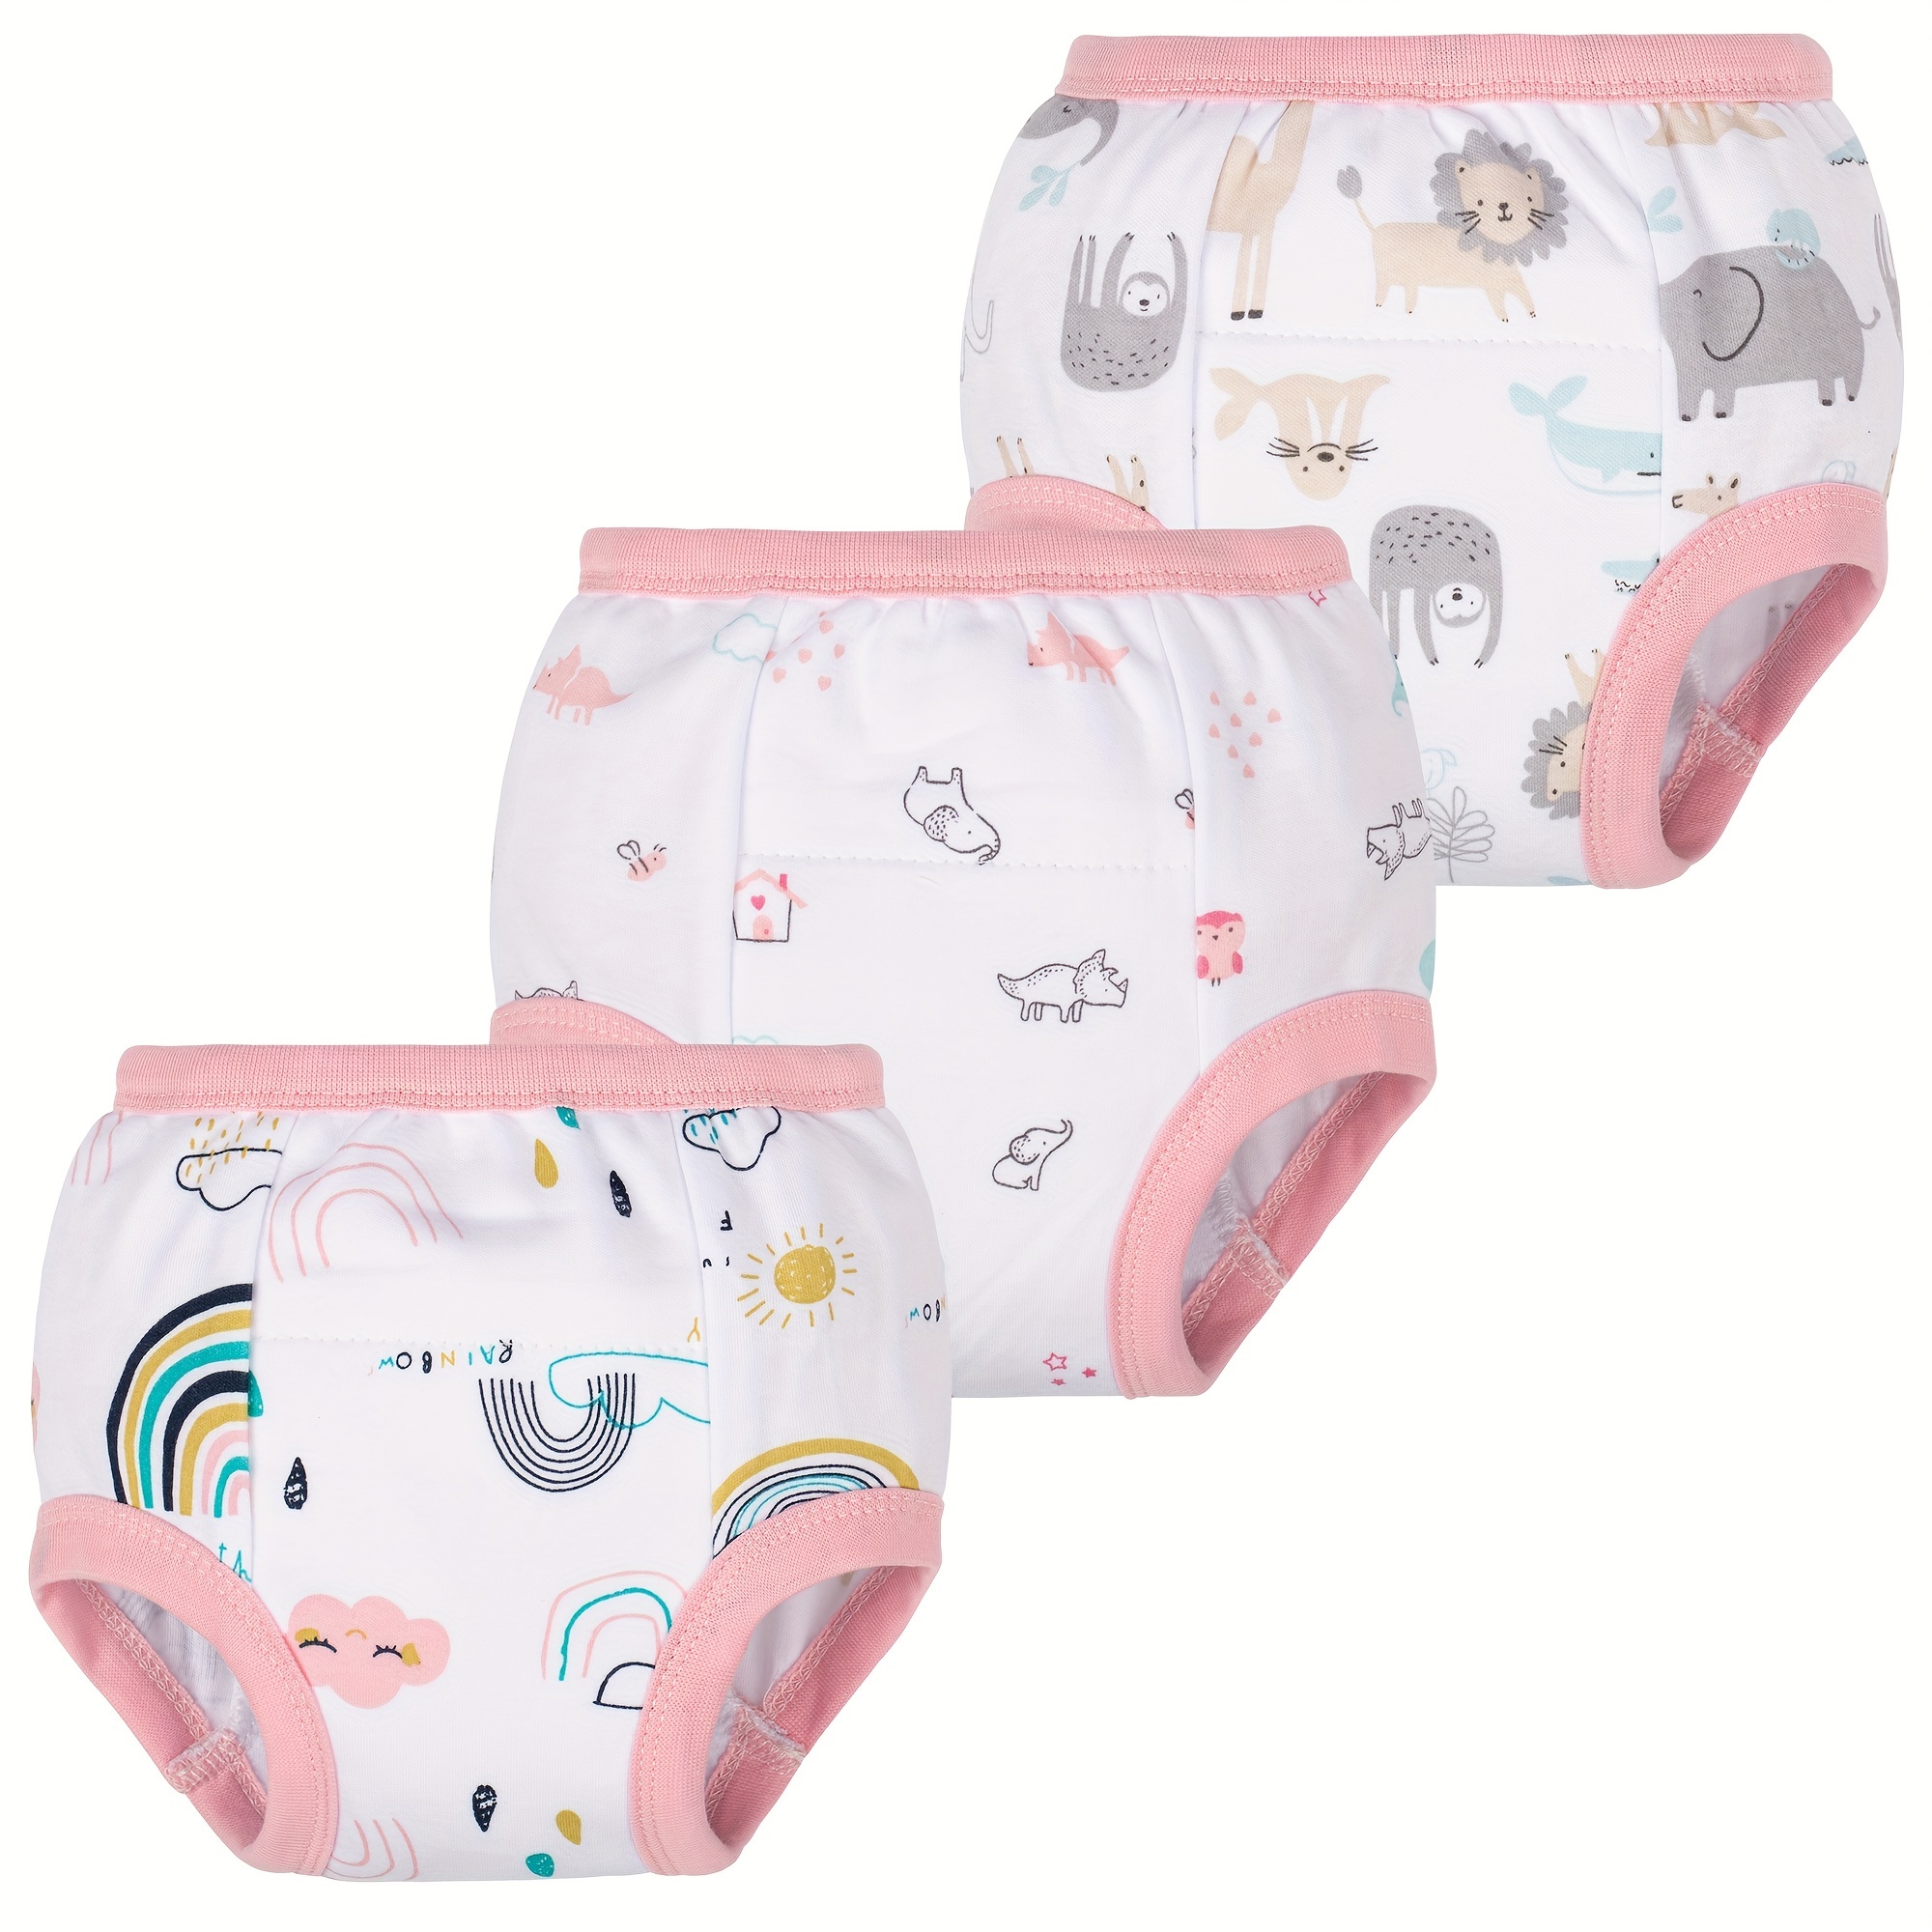 3pcs Baby Girls Training Underpants Toddler Training Pants 3 Pack